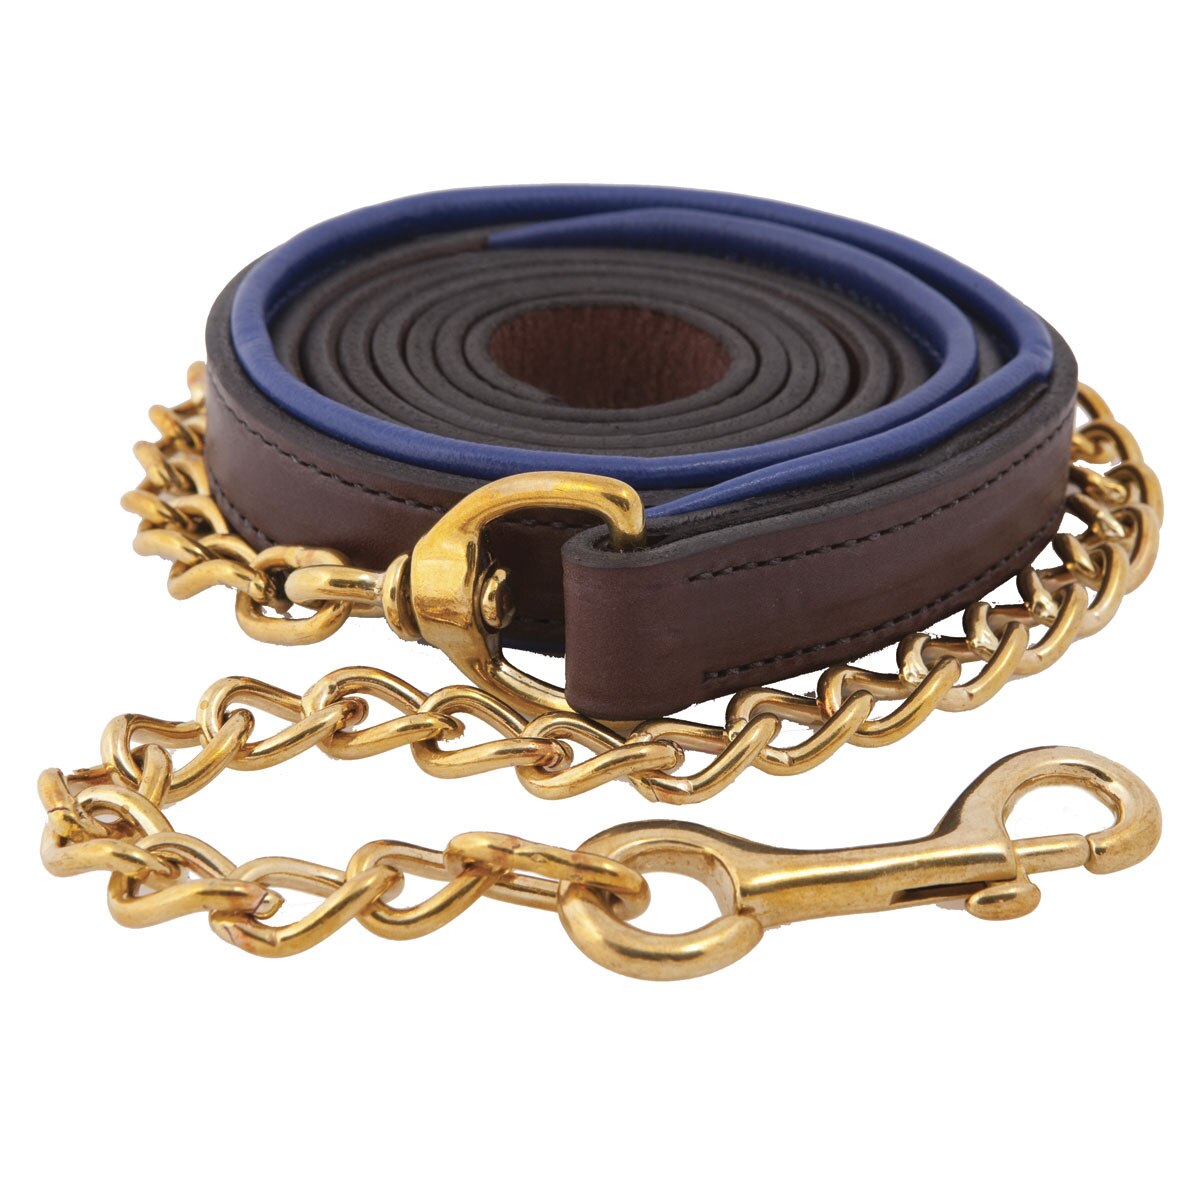 Kincade Leather Lead Rope Navy/Cream 6.6 foot 